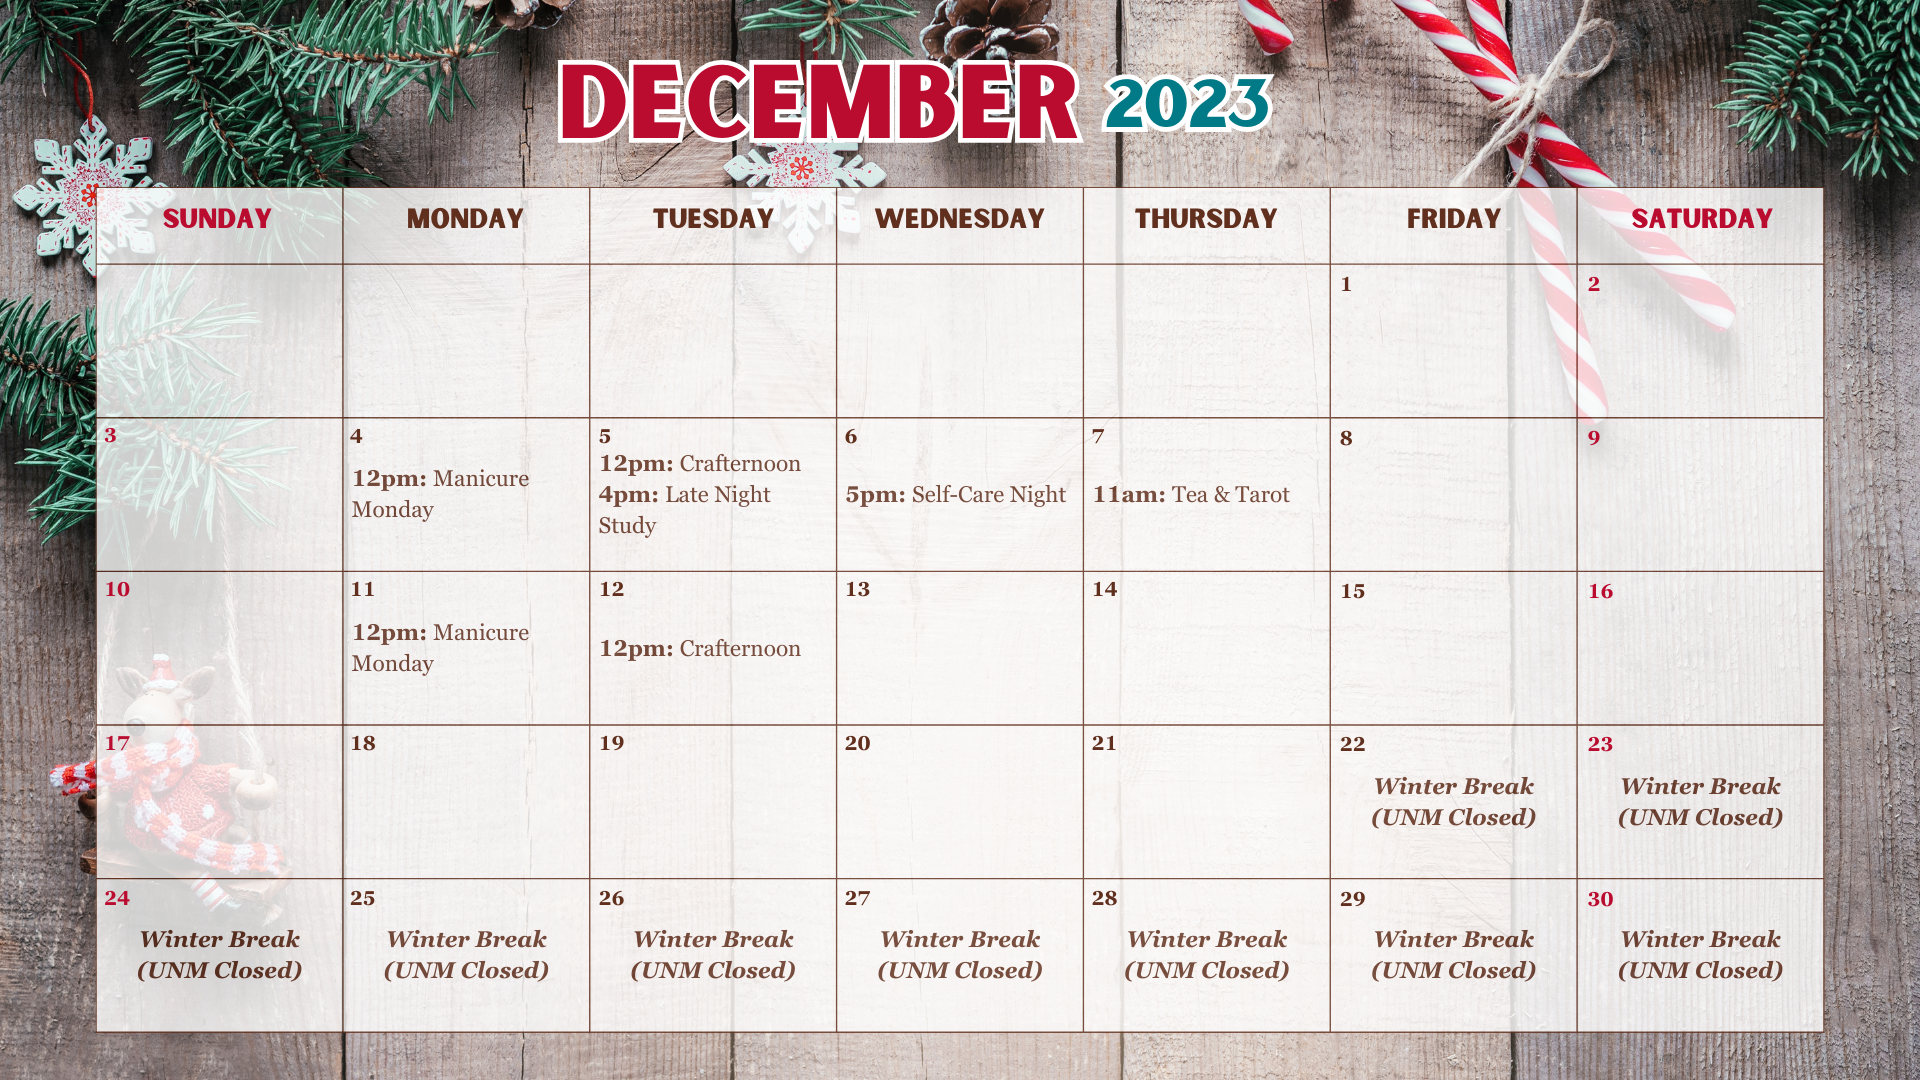 December 2023 Events